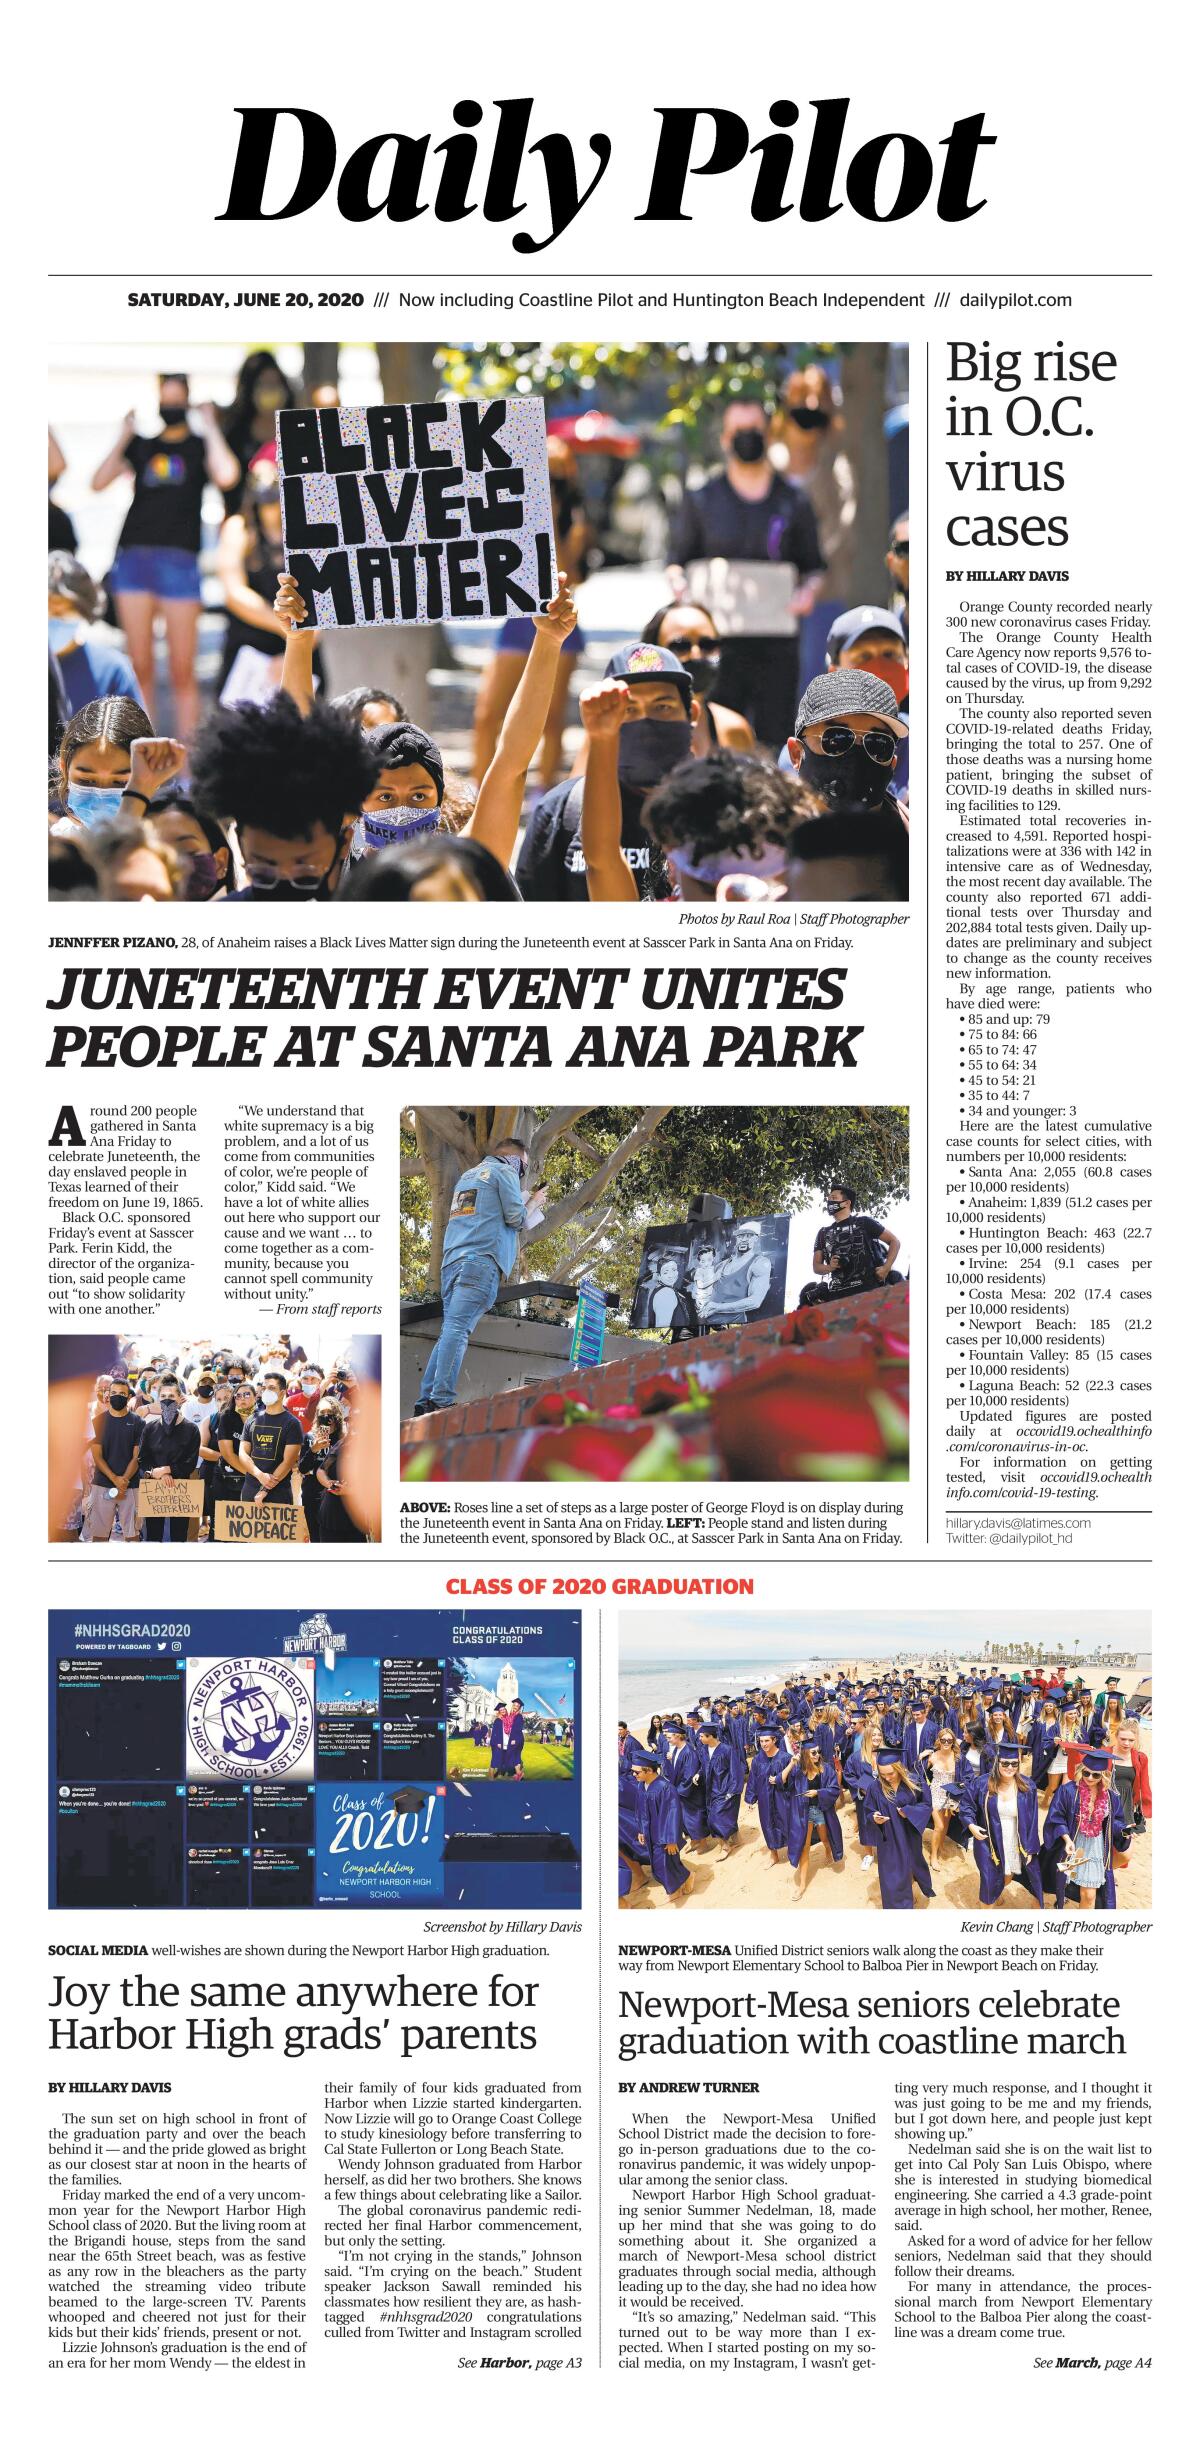 Daily Pilot e-Newspaper: Saturday, June 20, 2020 Cover